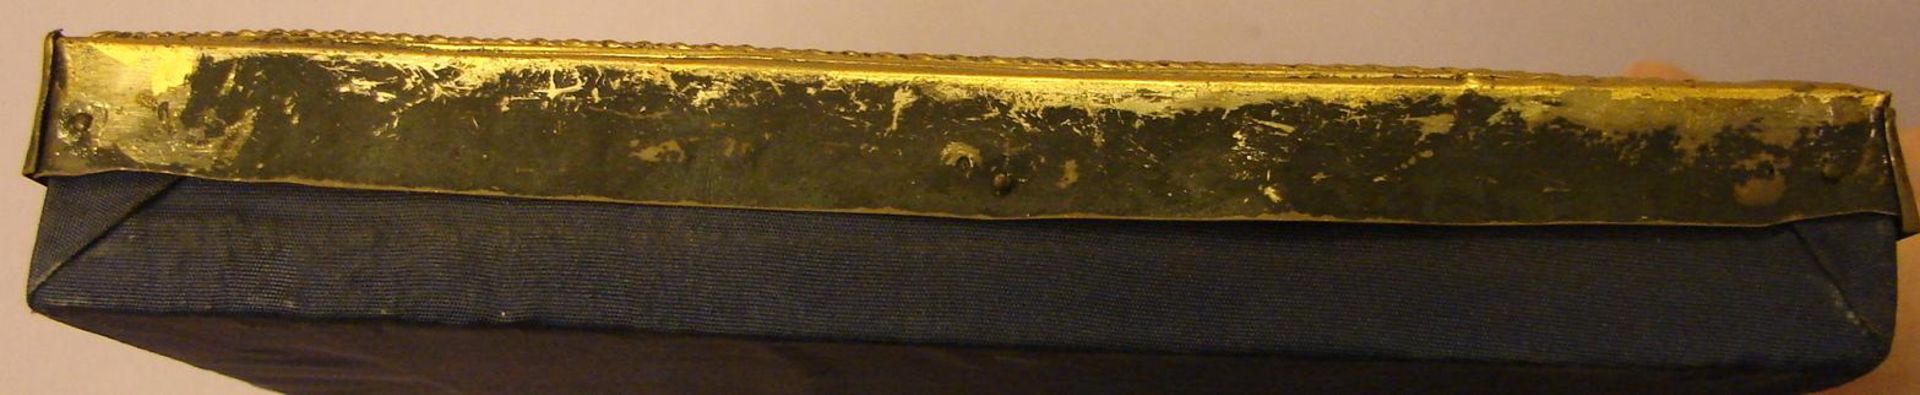 Ikone, 84er Stempel ?, mehrfach gestempelt, verschlagen, Silber vergoldet?, ca. 22x17,5 cm - Bild 4 aus 5